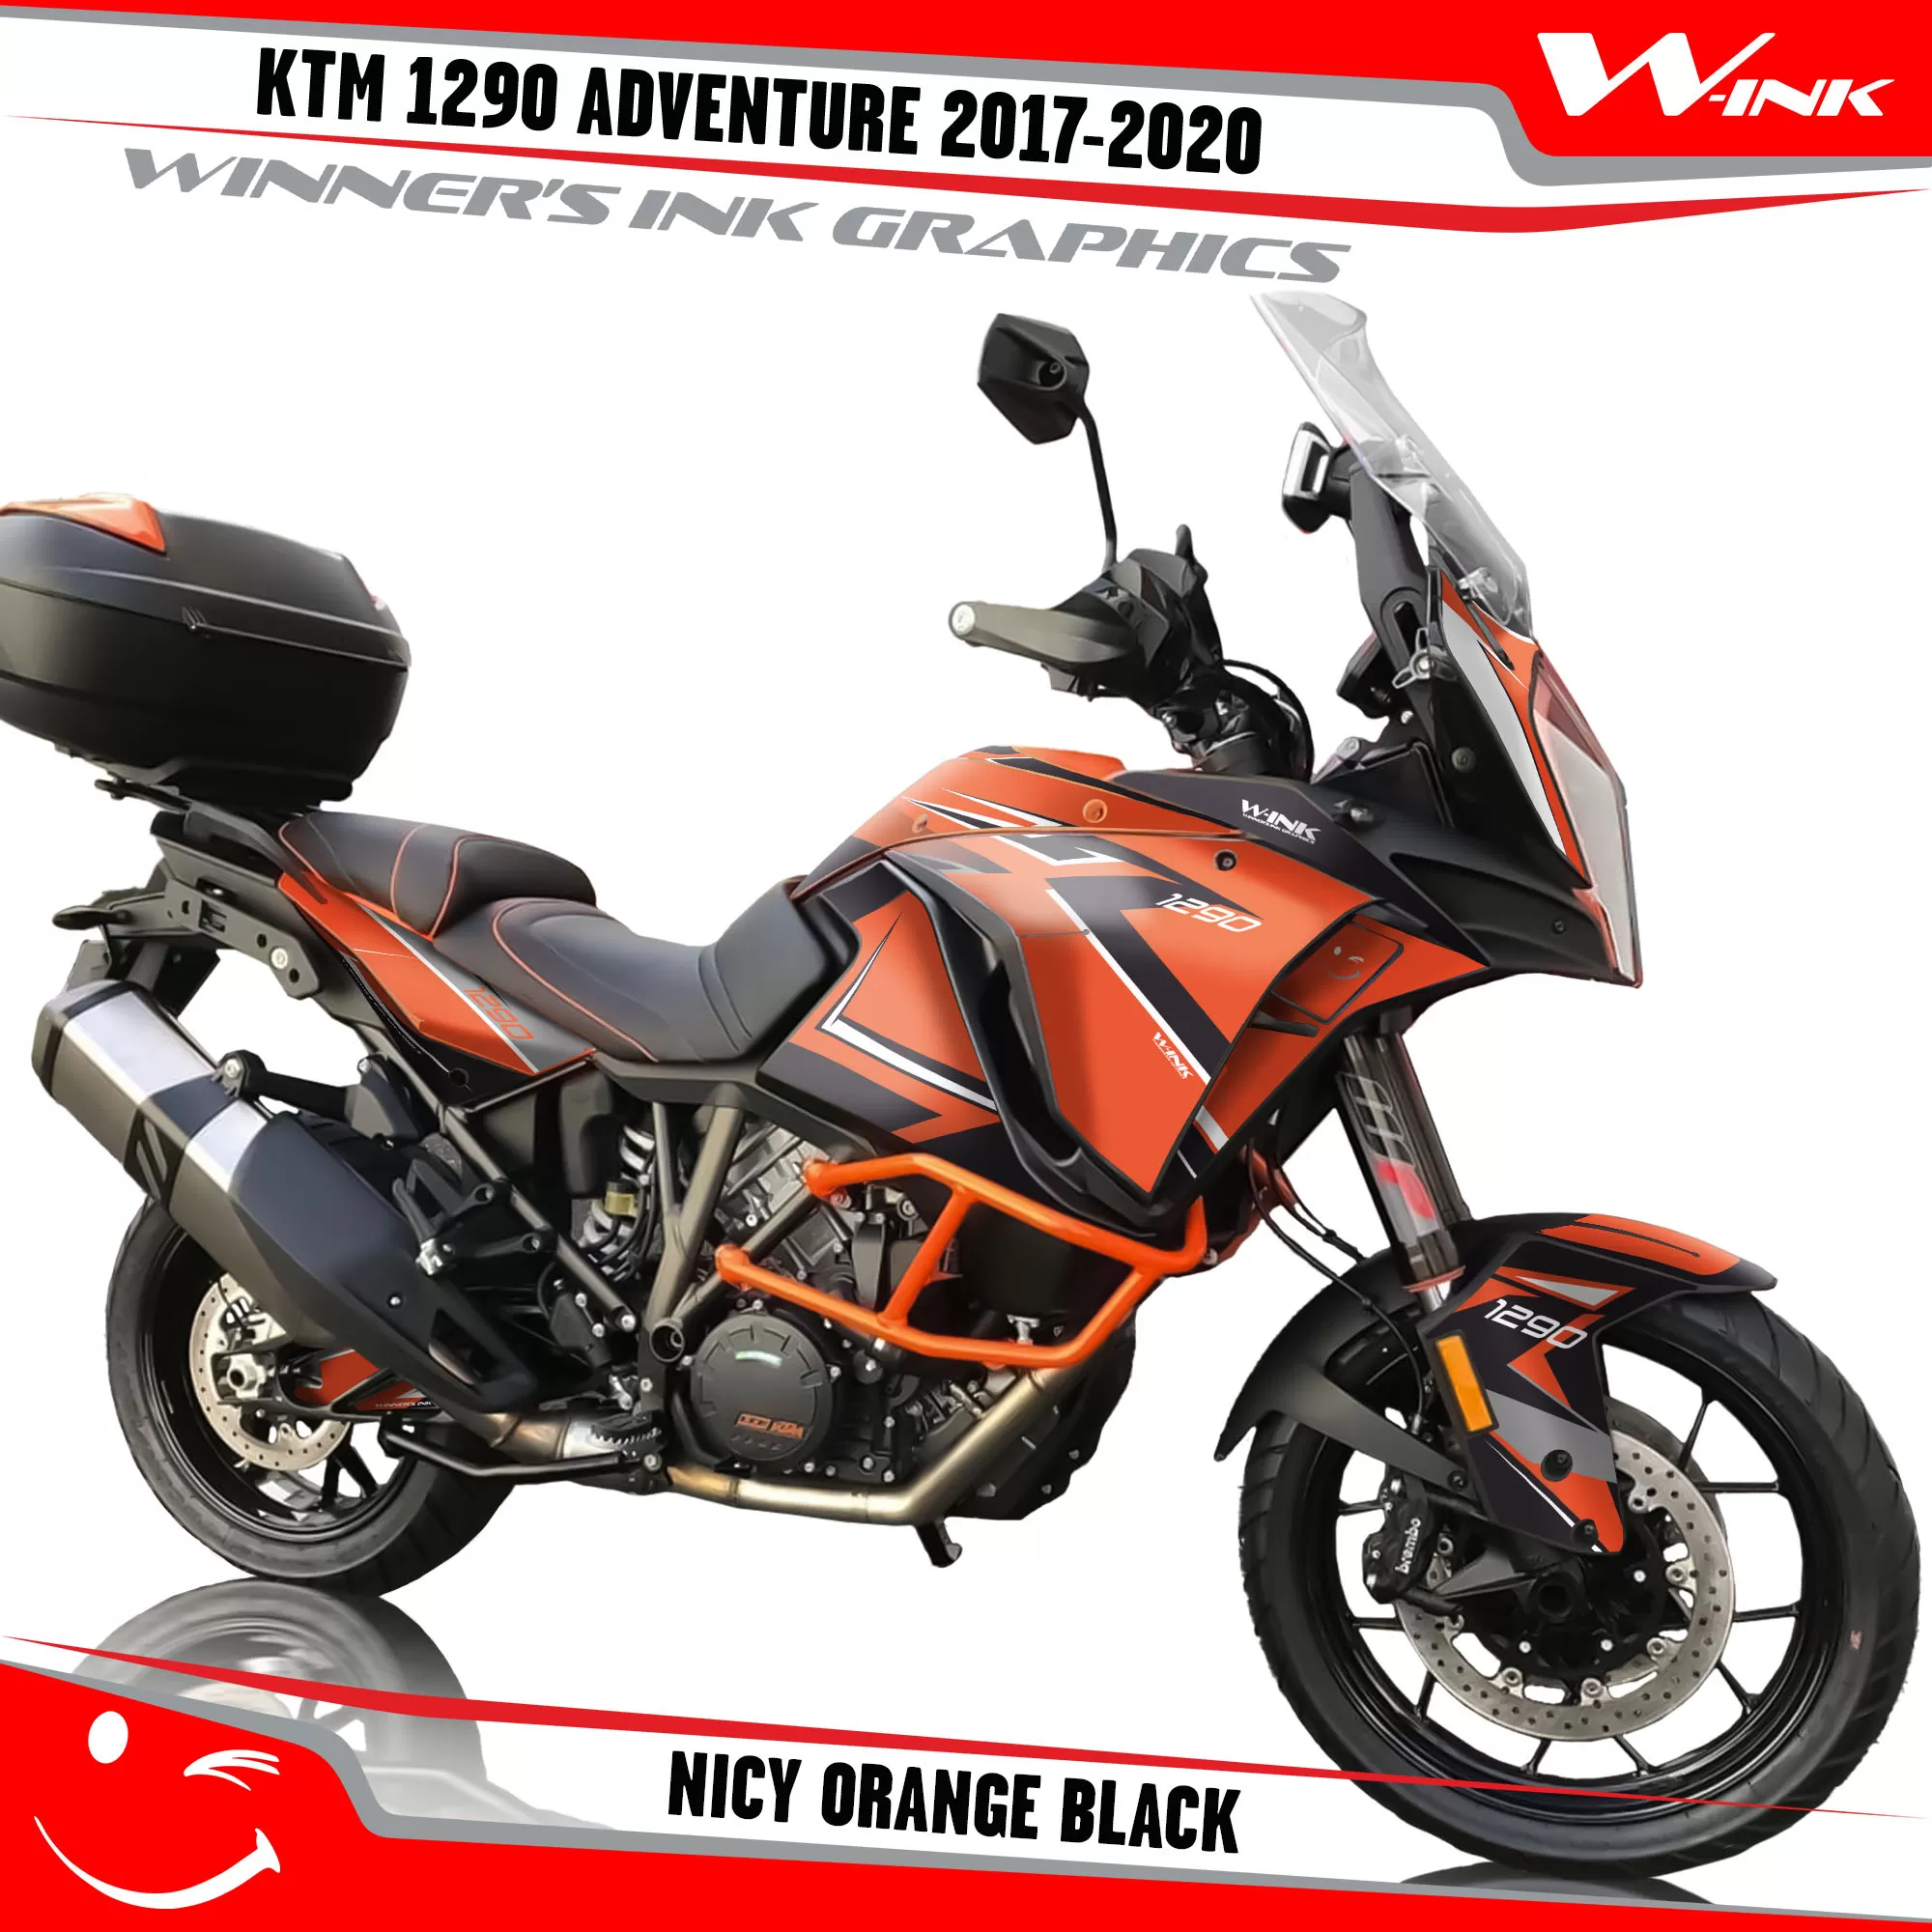 KTM-Adventure-1290-2017-2018-2019-2020-graphics-kit-and-decals-Nicy-Orange-Black